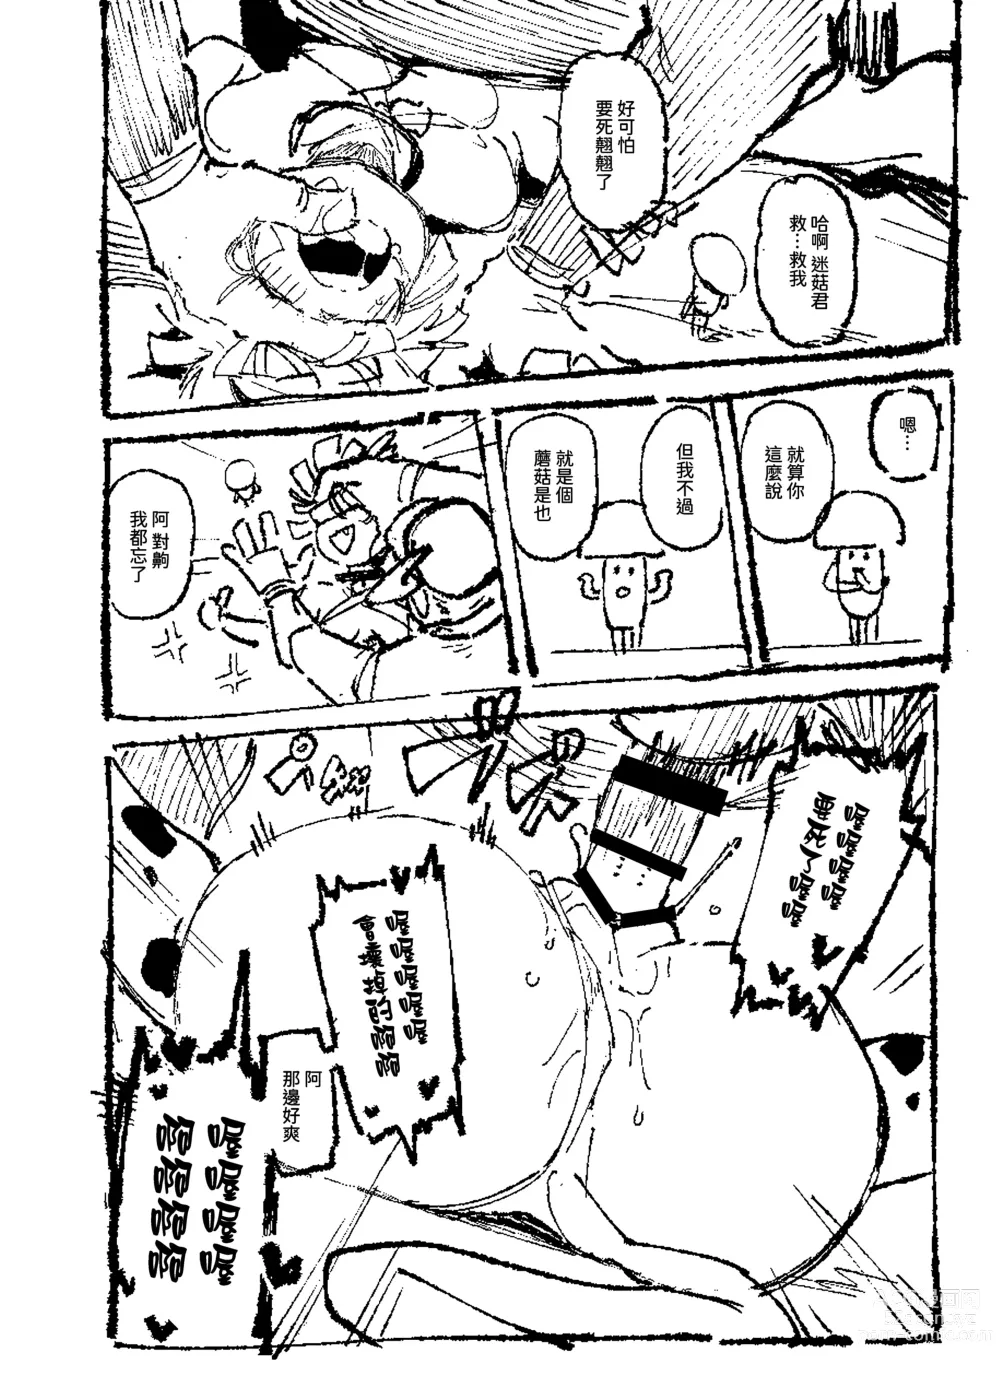 Page 25 of doujinshi 家裡過於潮濕長出致幻蘑菇意外誤食後發情的那些事